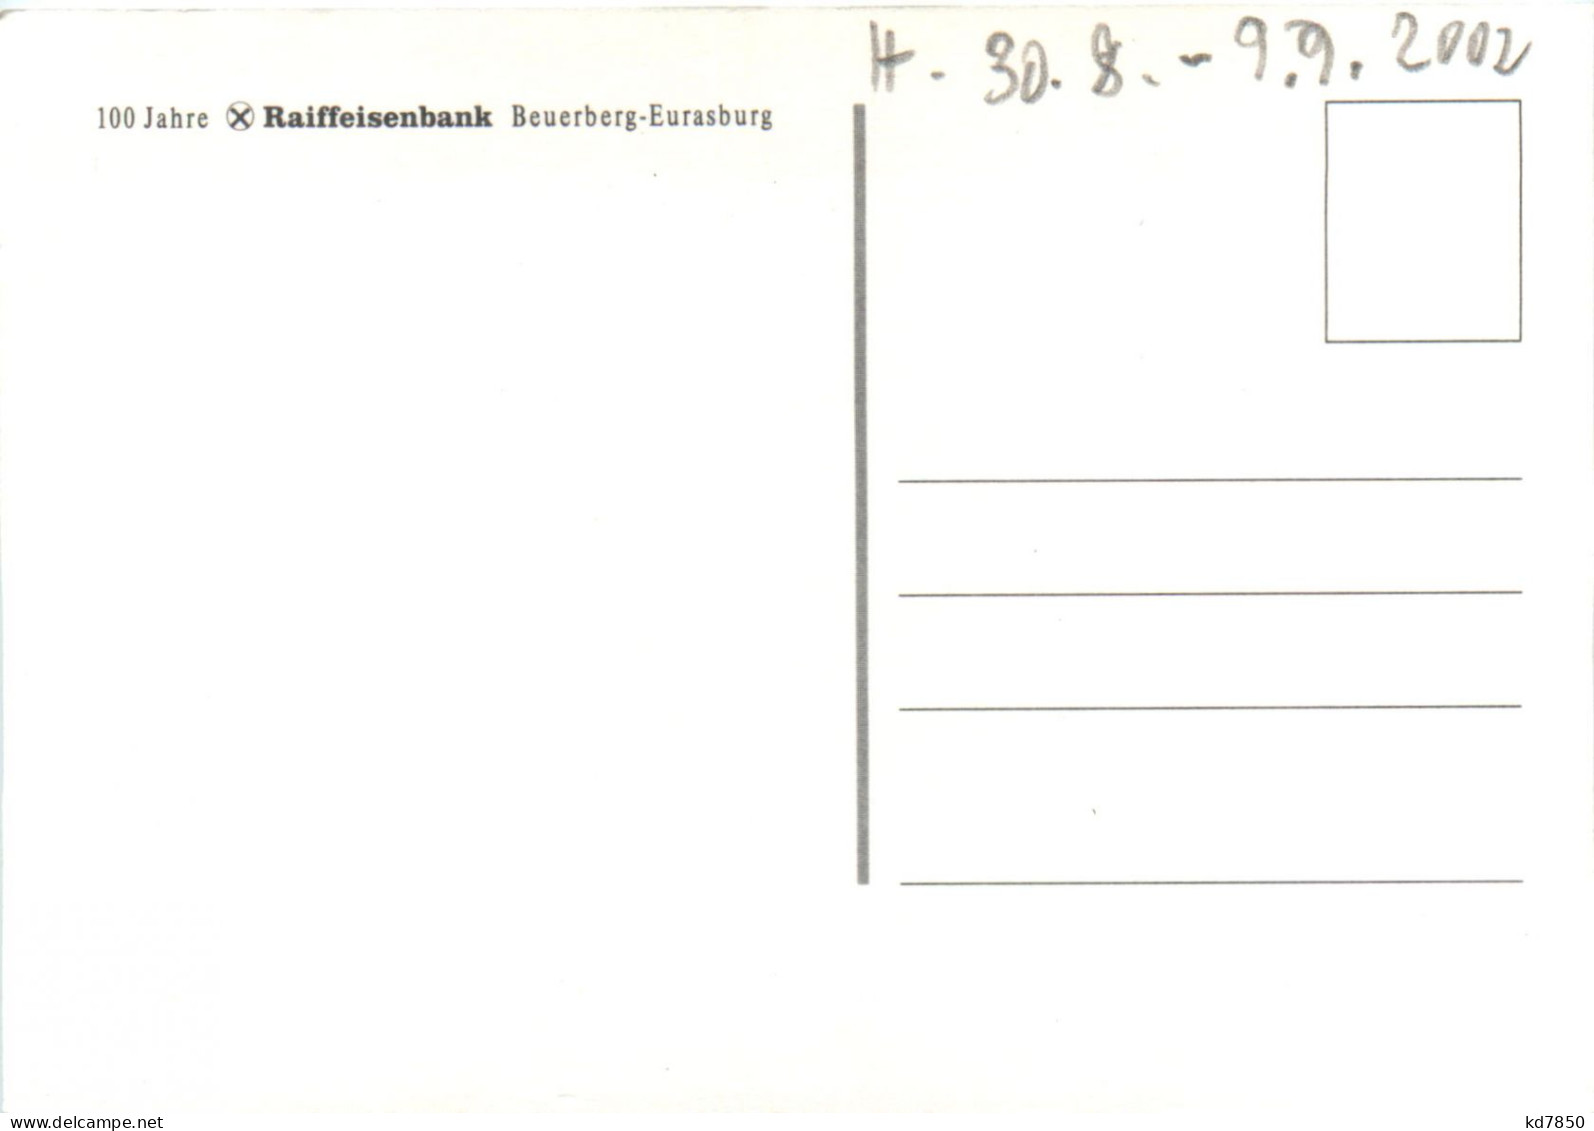 100 Jahre Raiffeisenbank Beuerberg-Eurasburg 2002 - Königsdorf - Bad Toelz